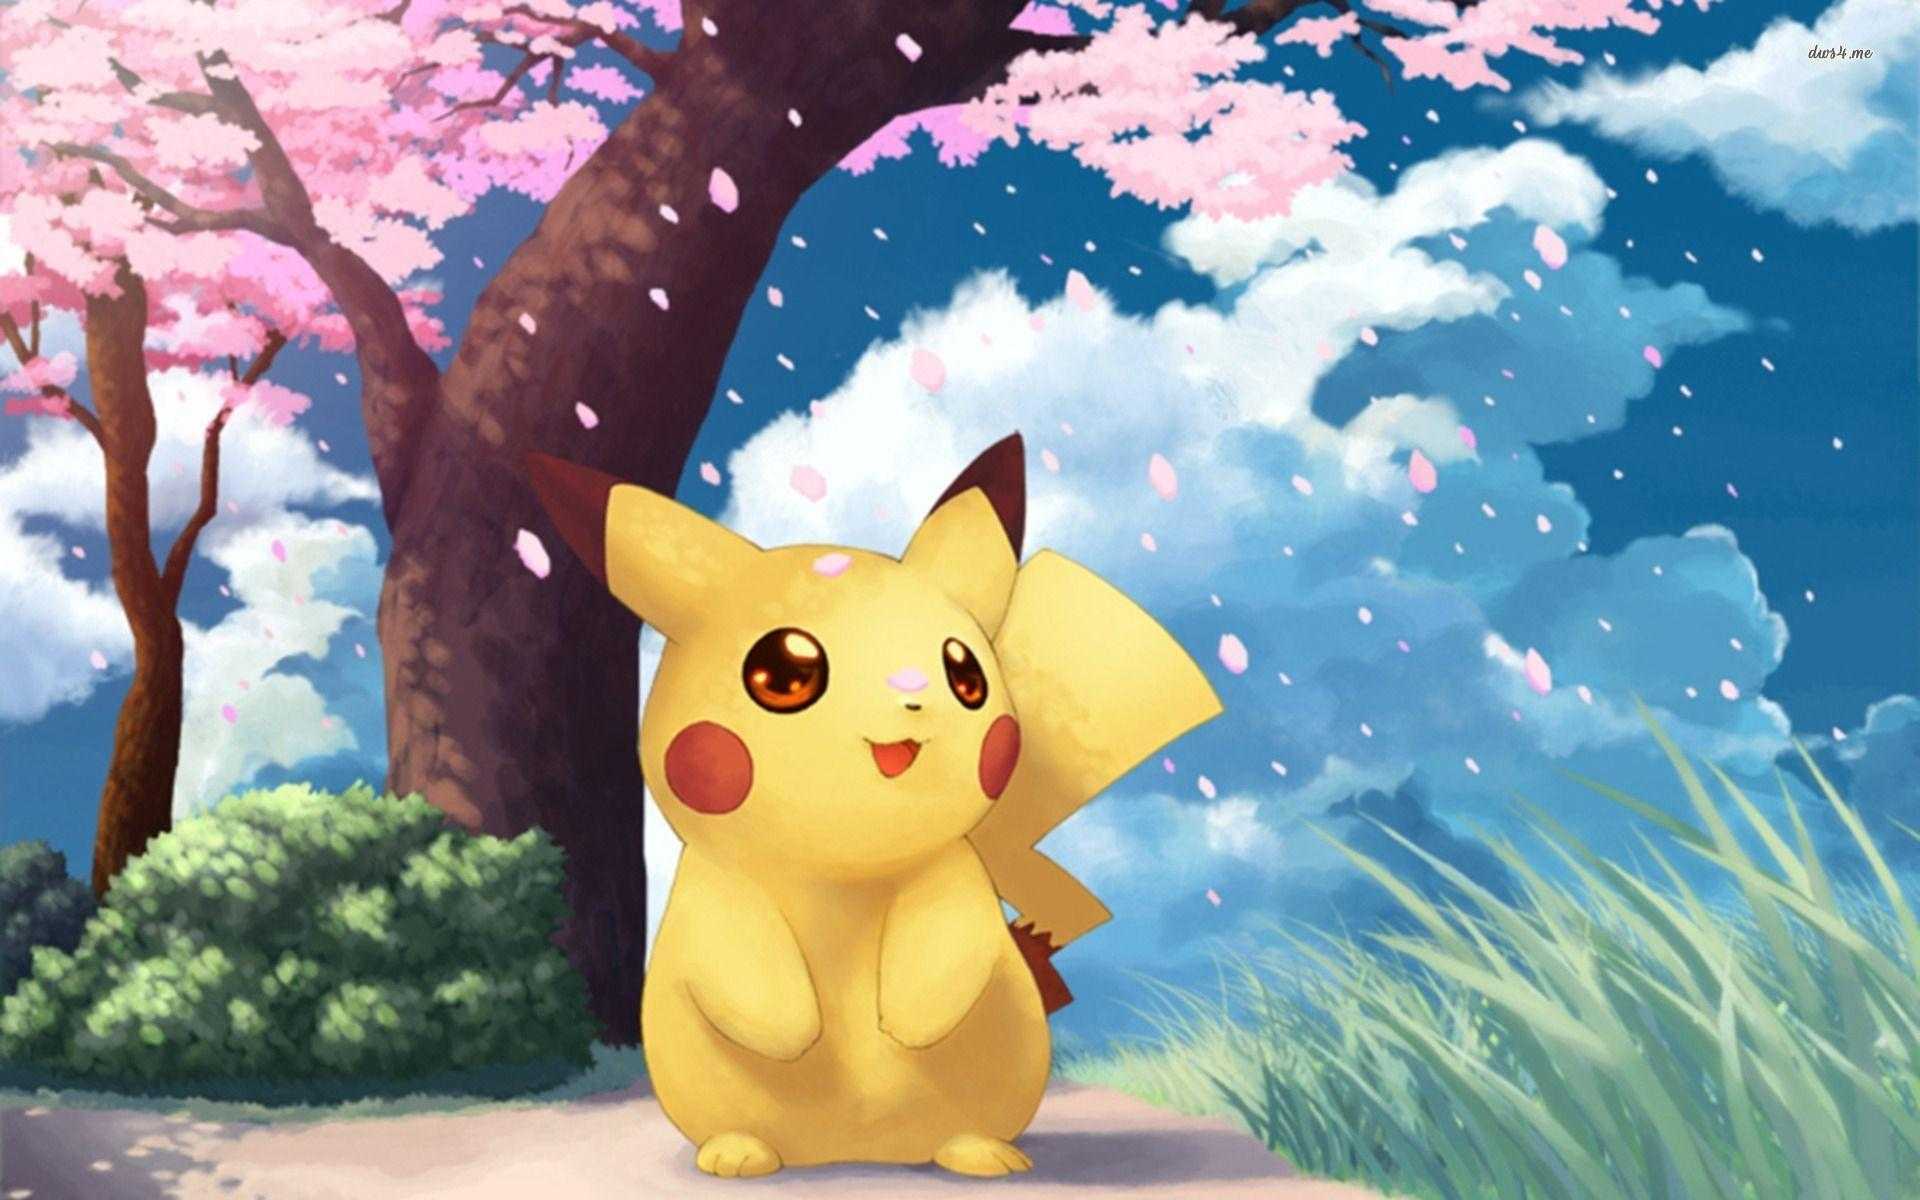 Cute Pokemon Wallpapers - Top Free Cute Pokemon Backgrounds ...